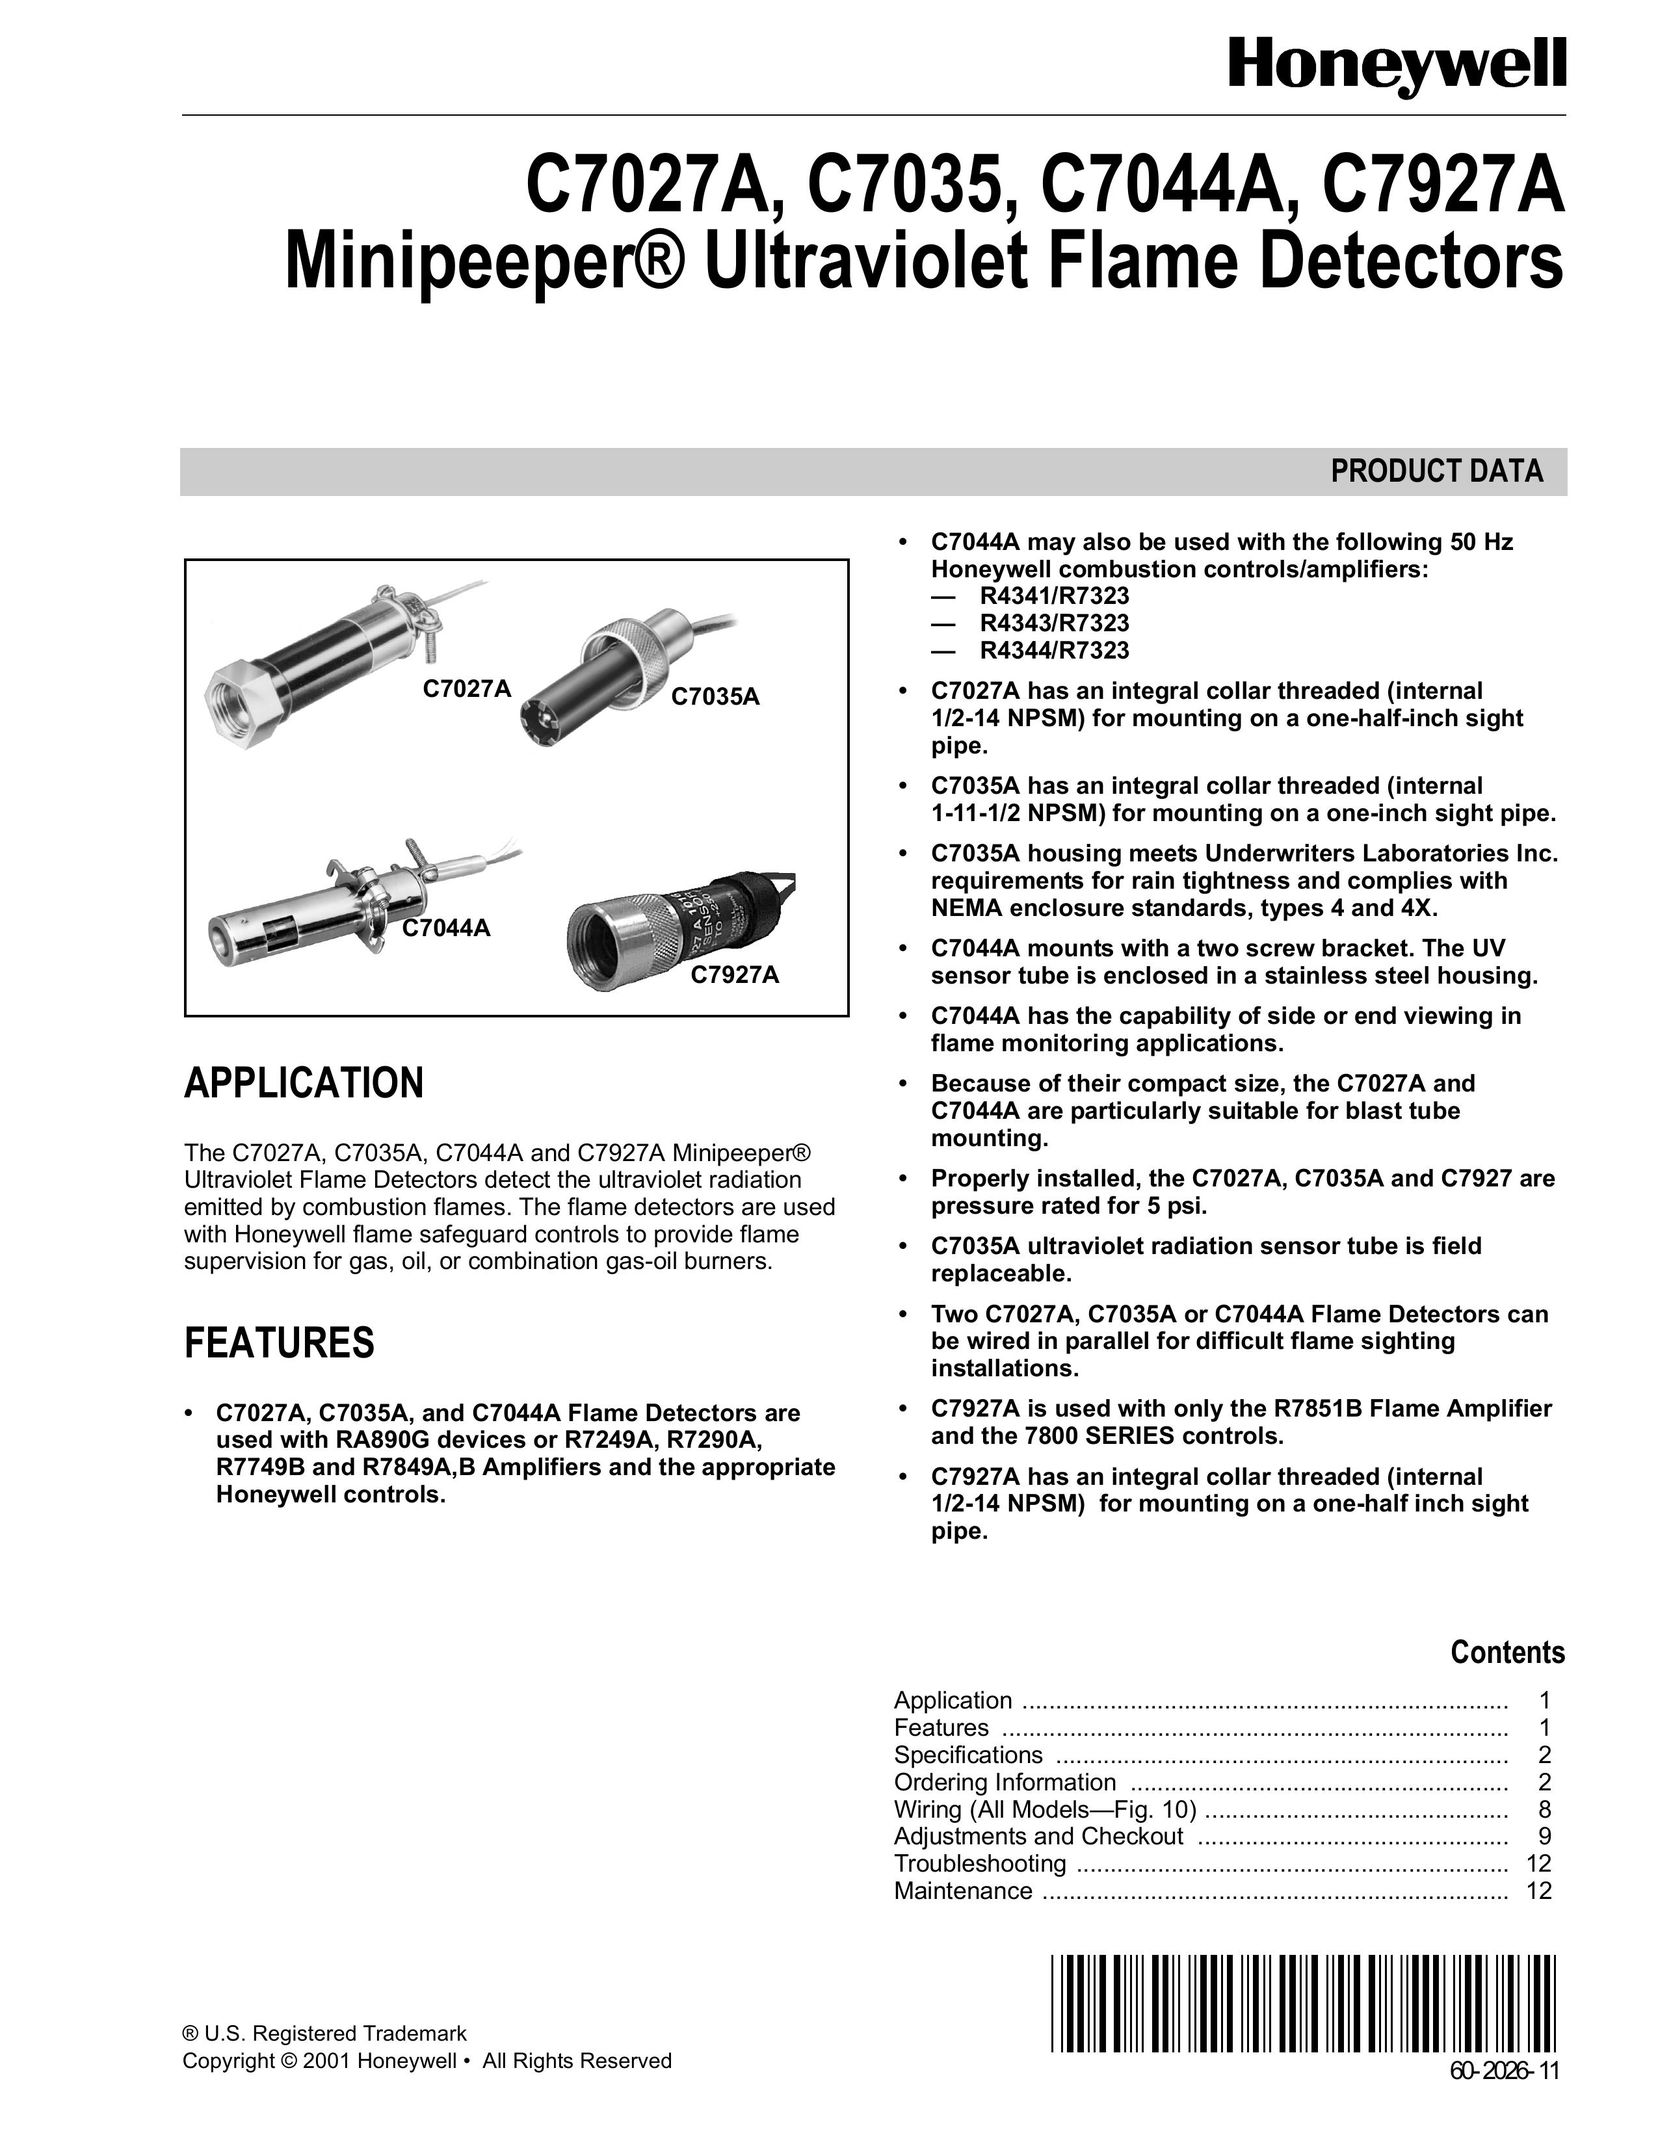 Honeywell C7927A Carbon Monoxide Alarm User Manual